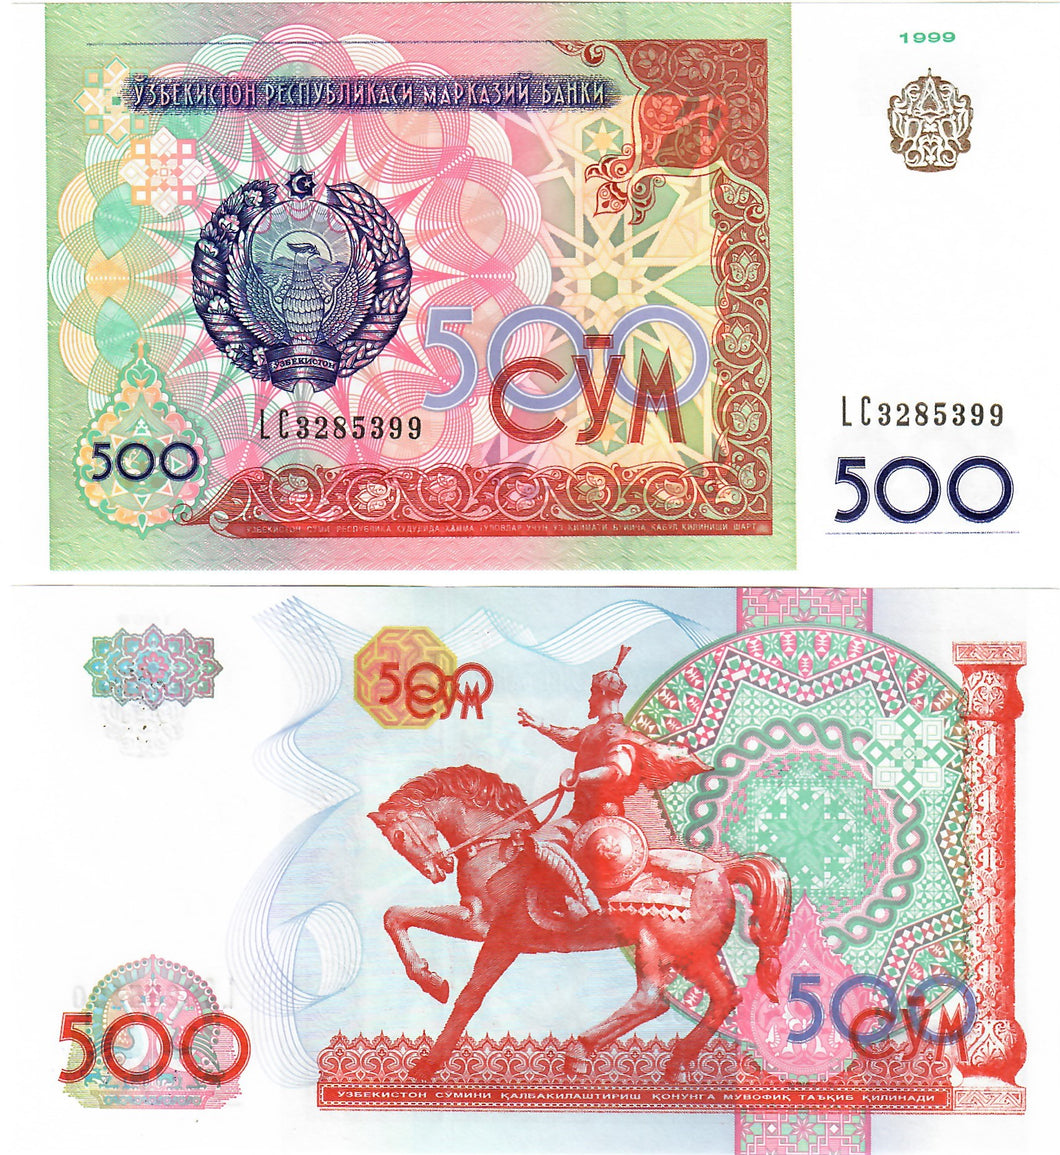 Uzbekistan 500 Som 1999 UNC